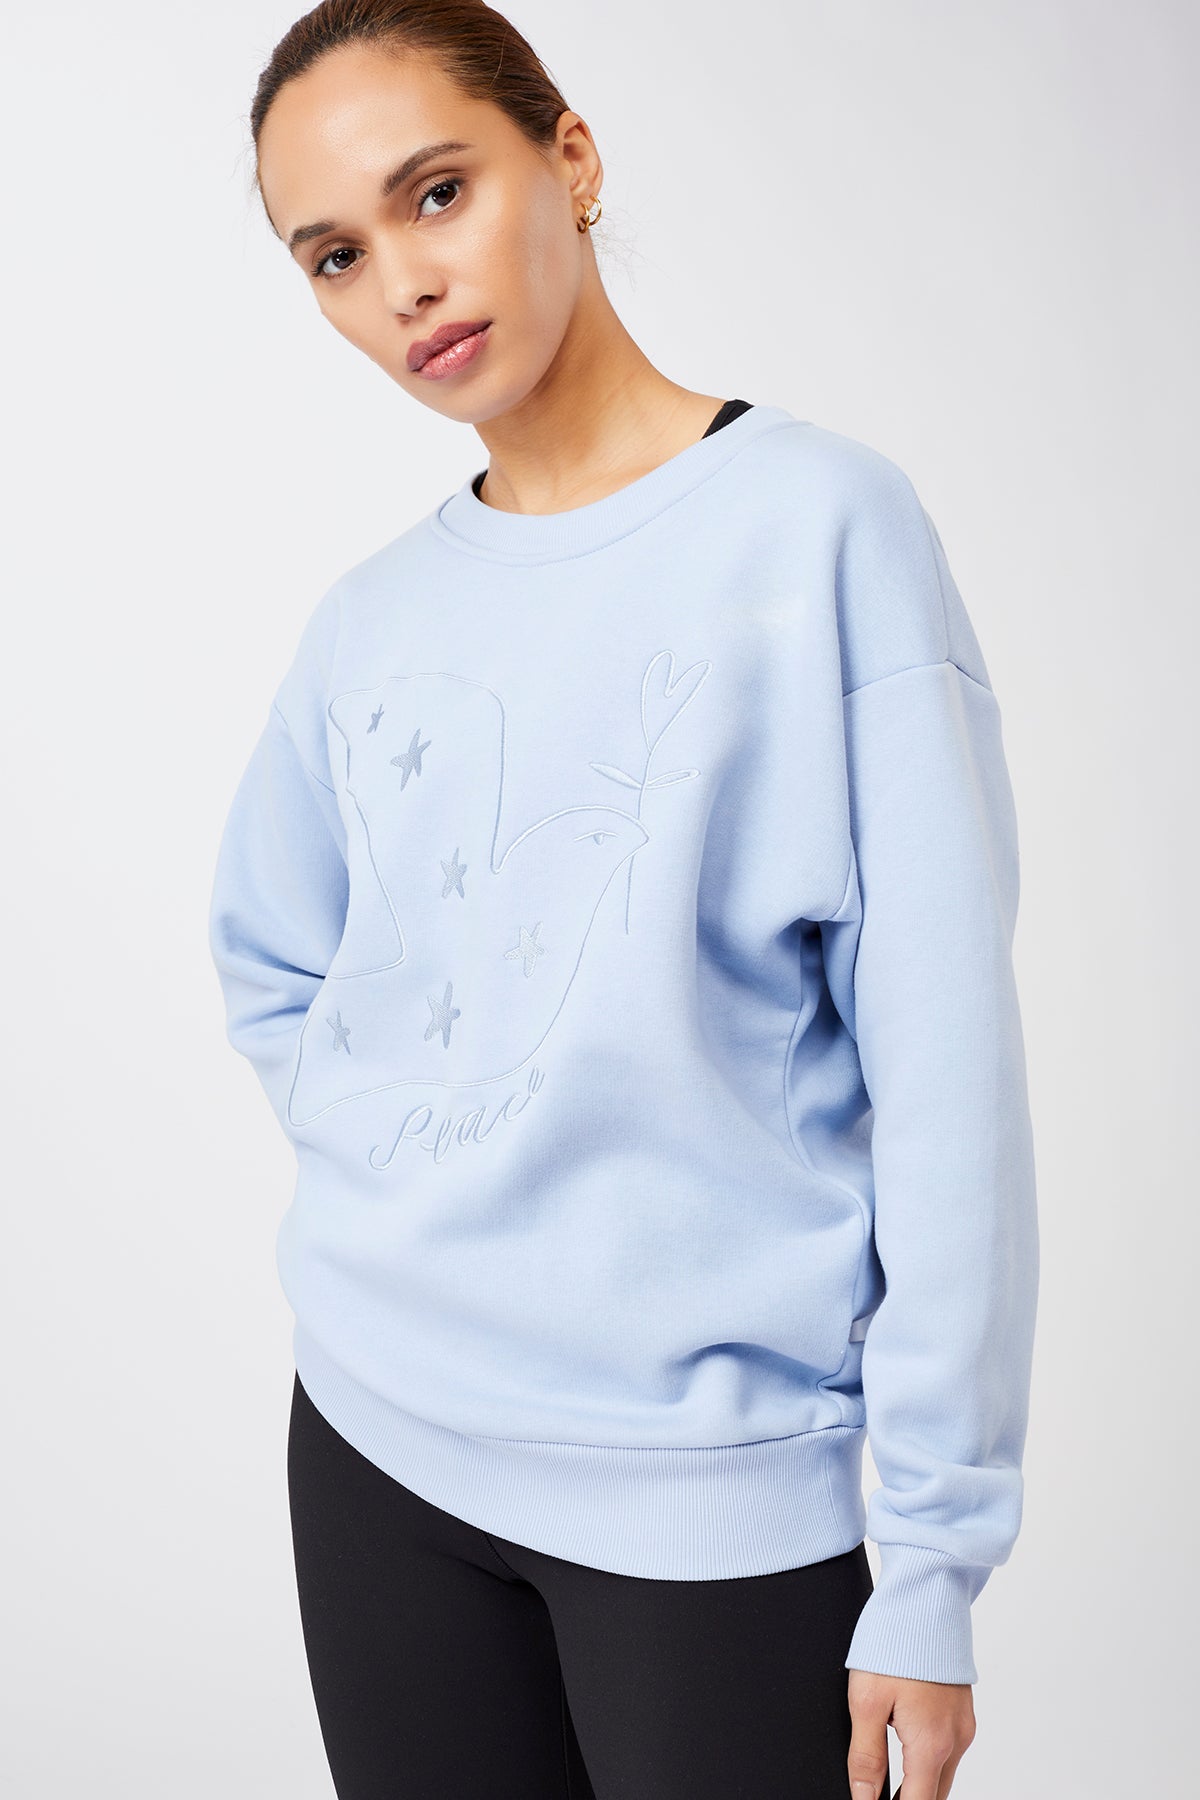 Mandala Yoga Pullover Blau Front - Peace Sweater